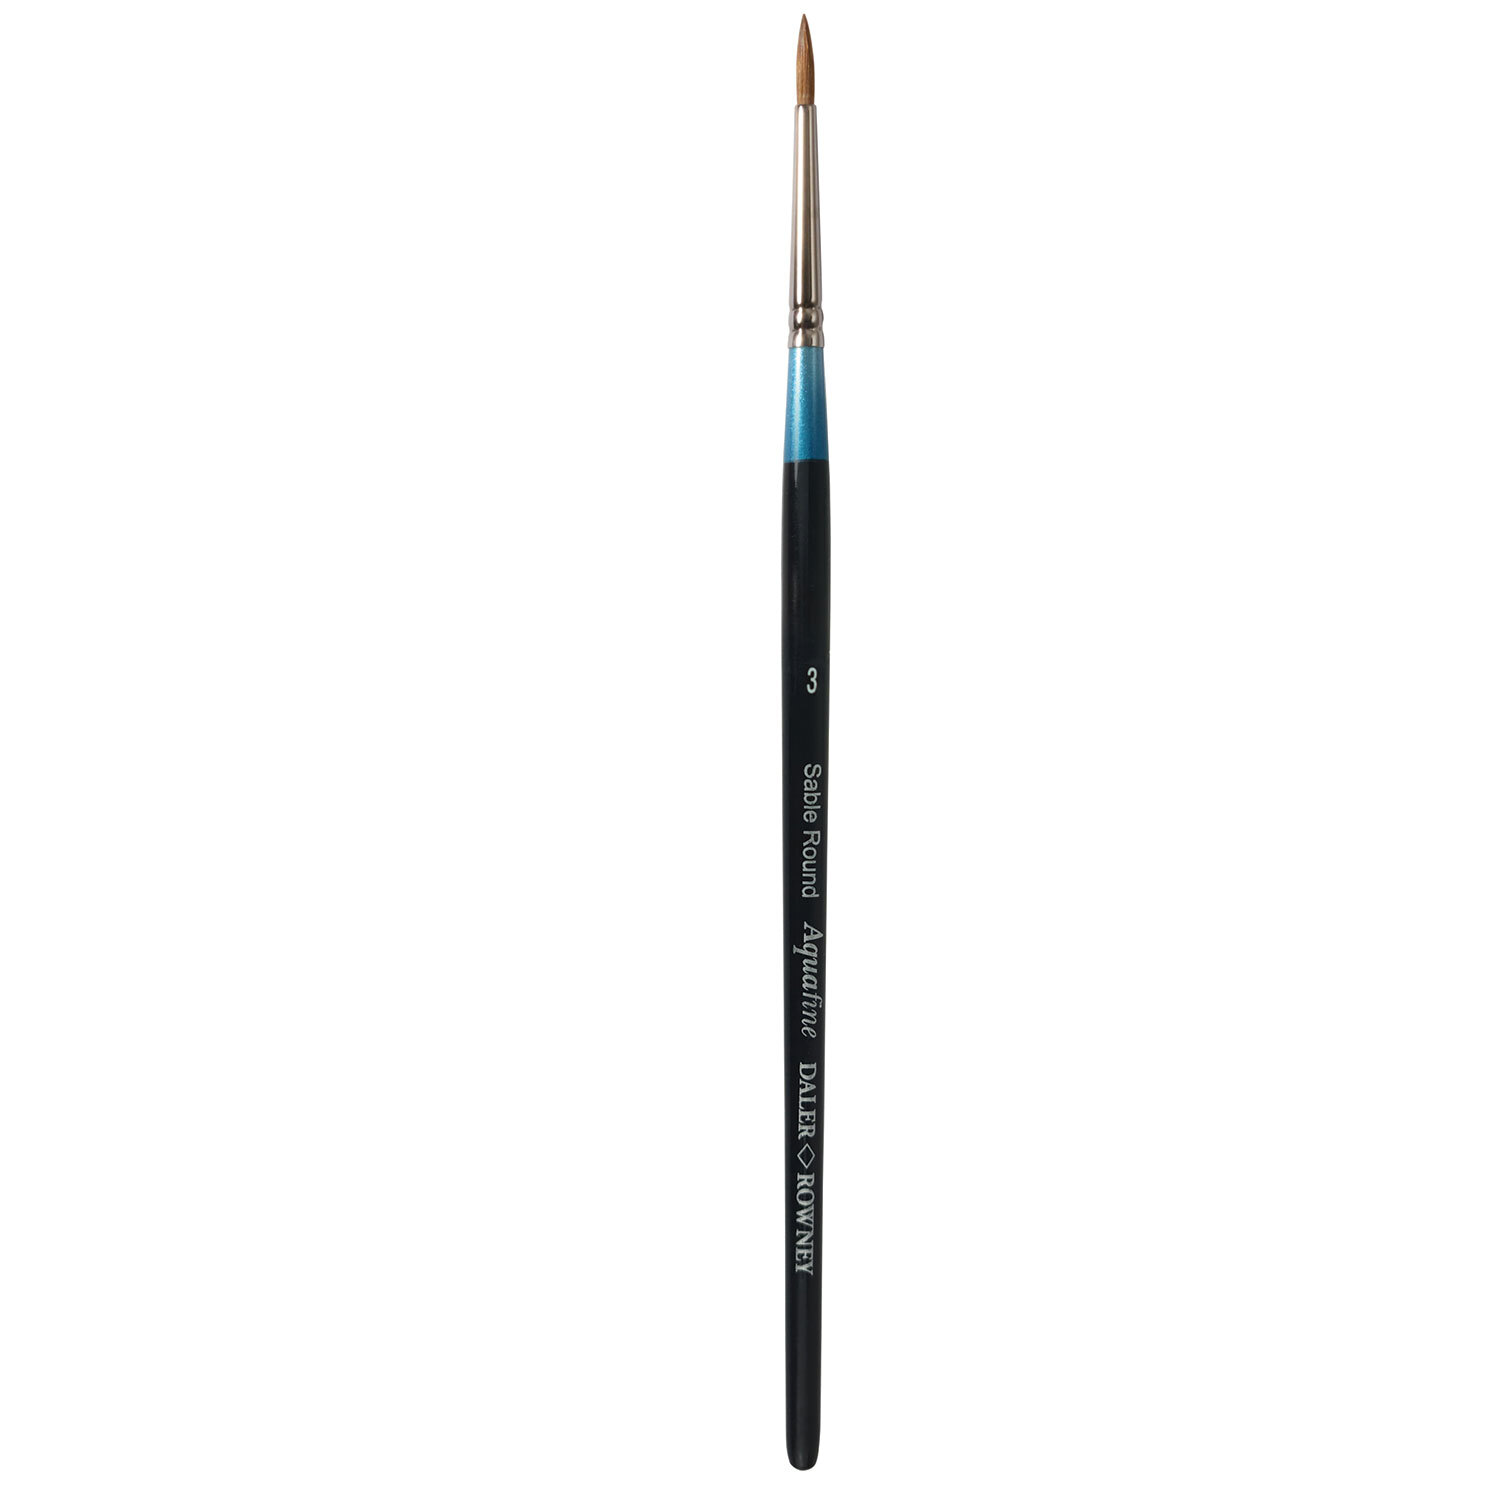 Daler-Rowney Aquafine Natural Sable Round Short Handled Brush - 3 Image